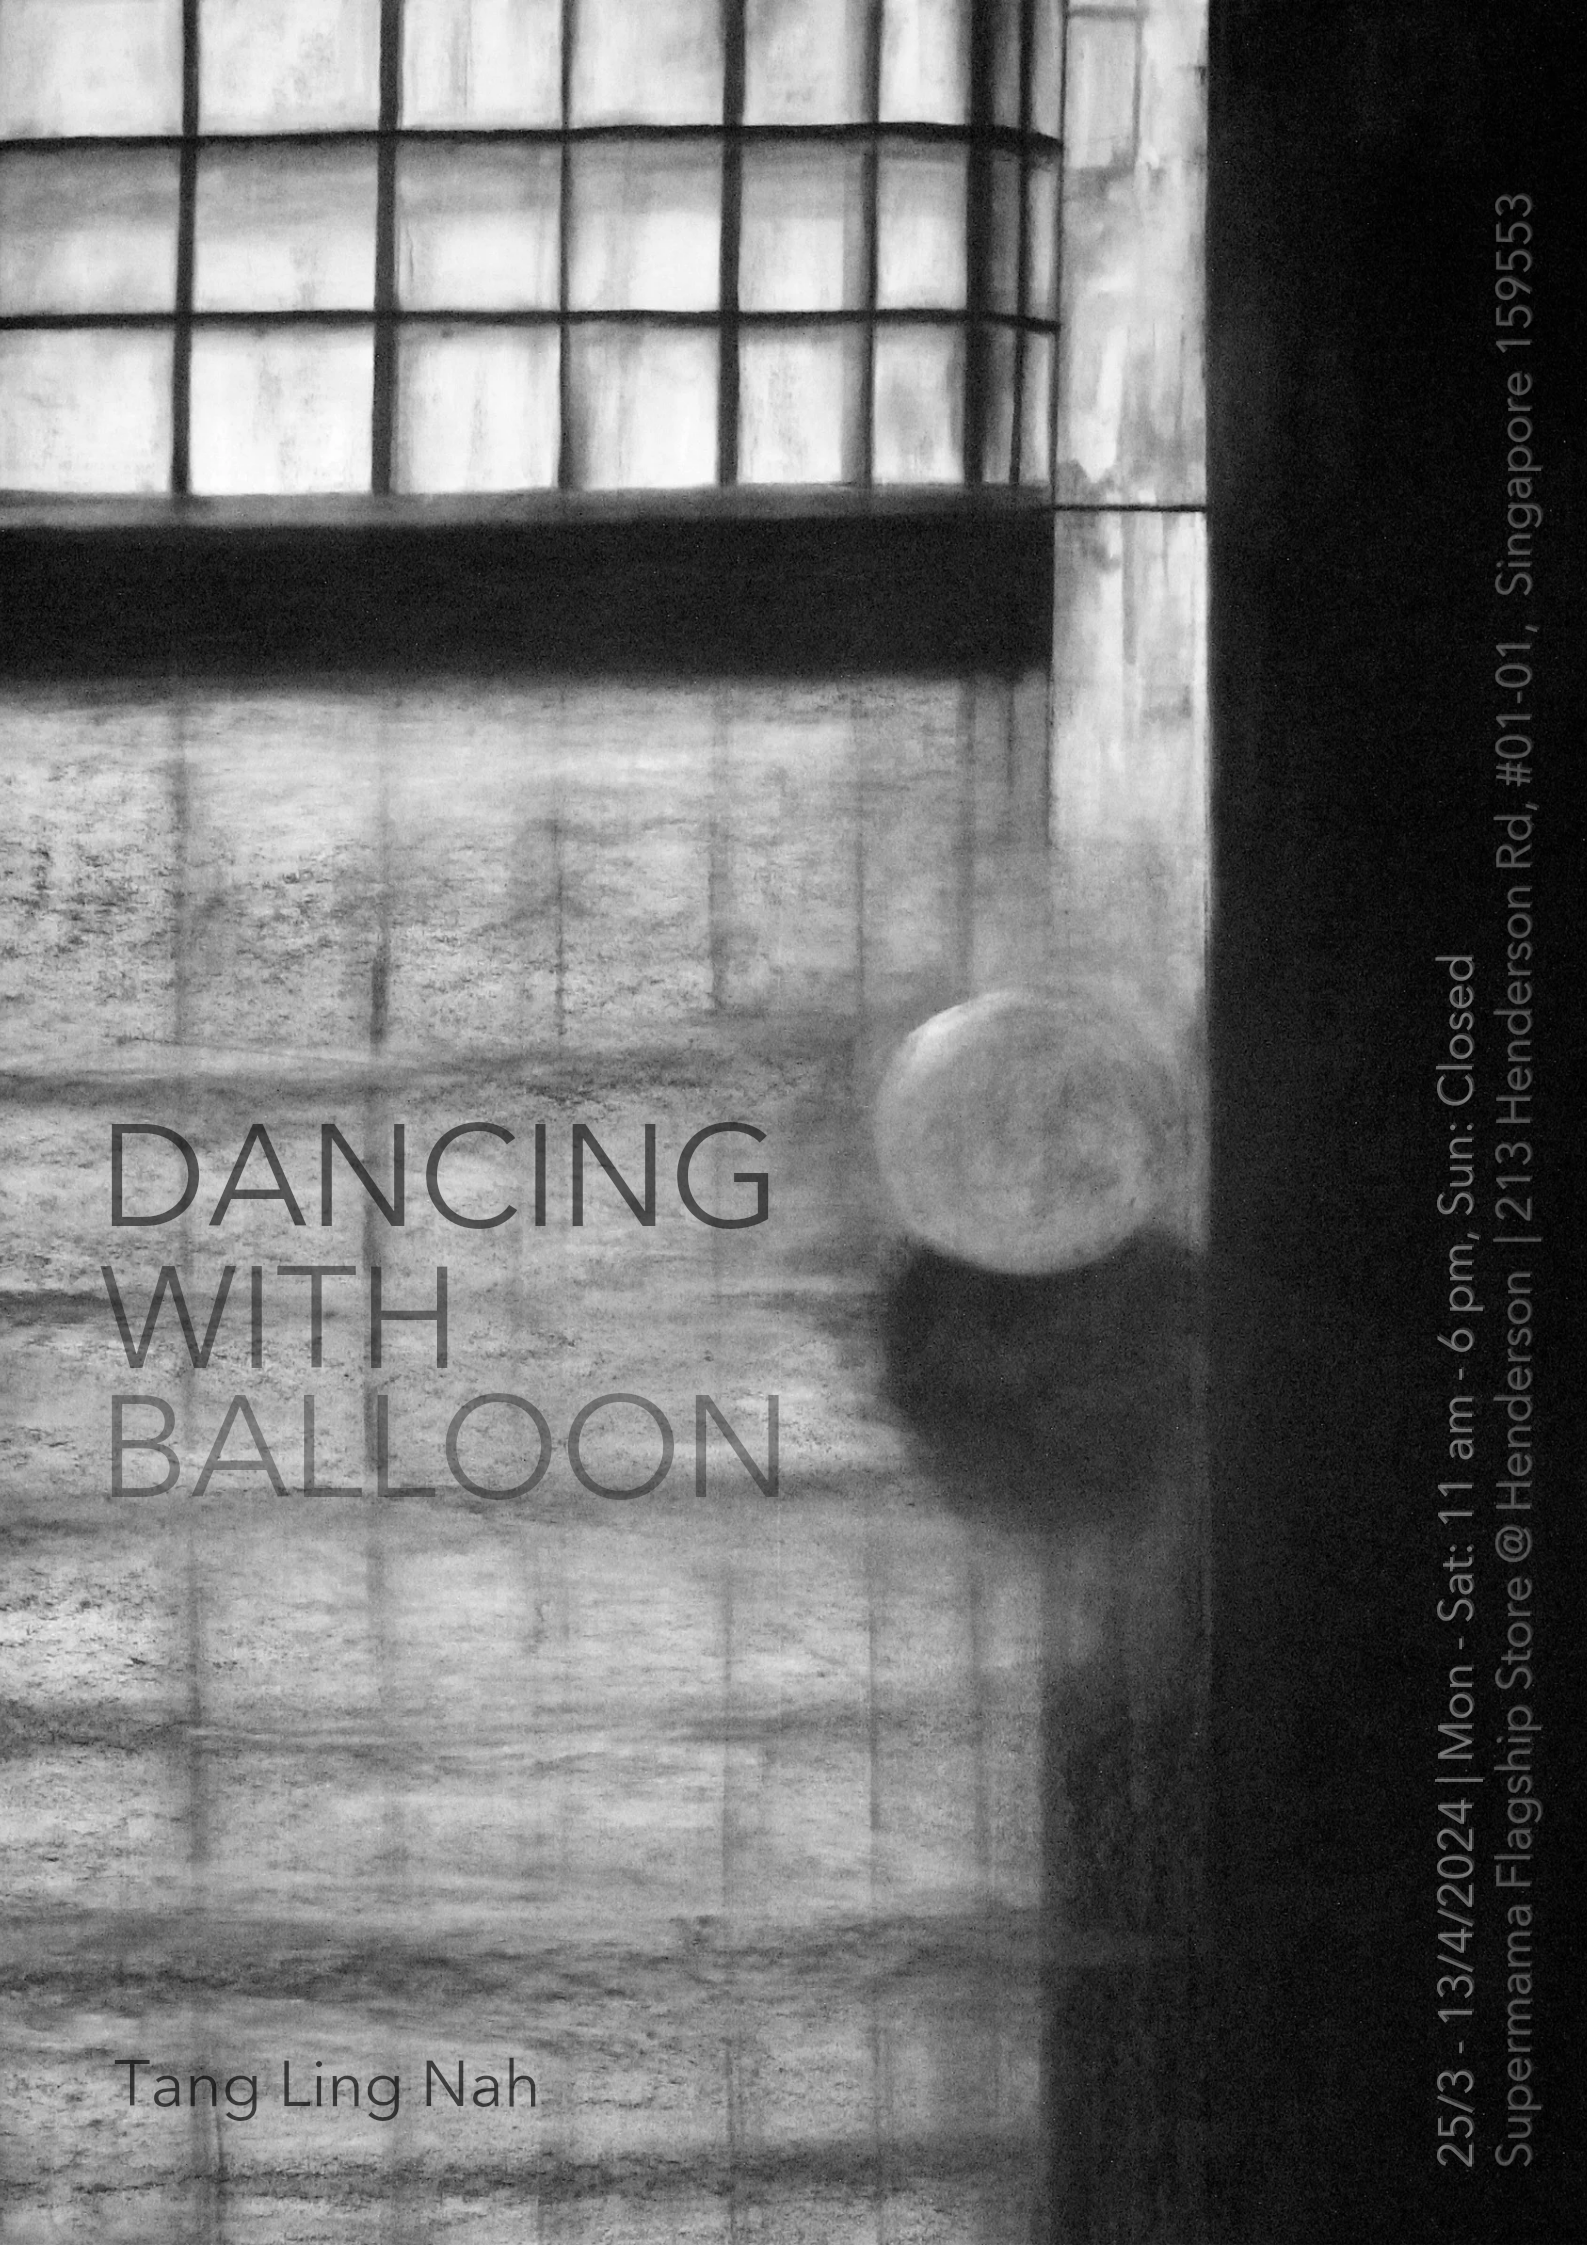 Dancing with Balloon Tang Ling Nah